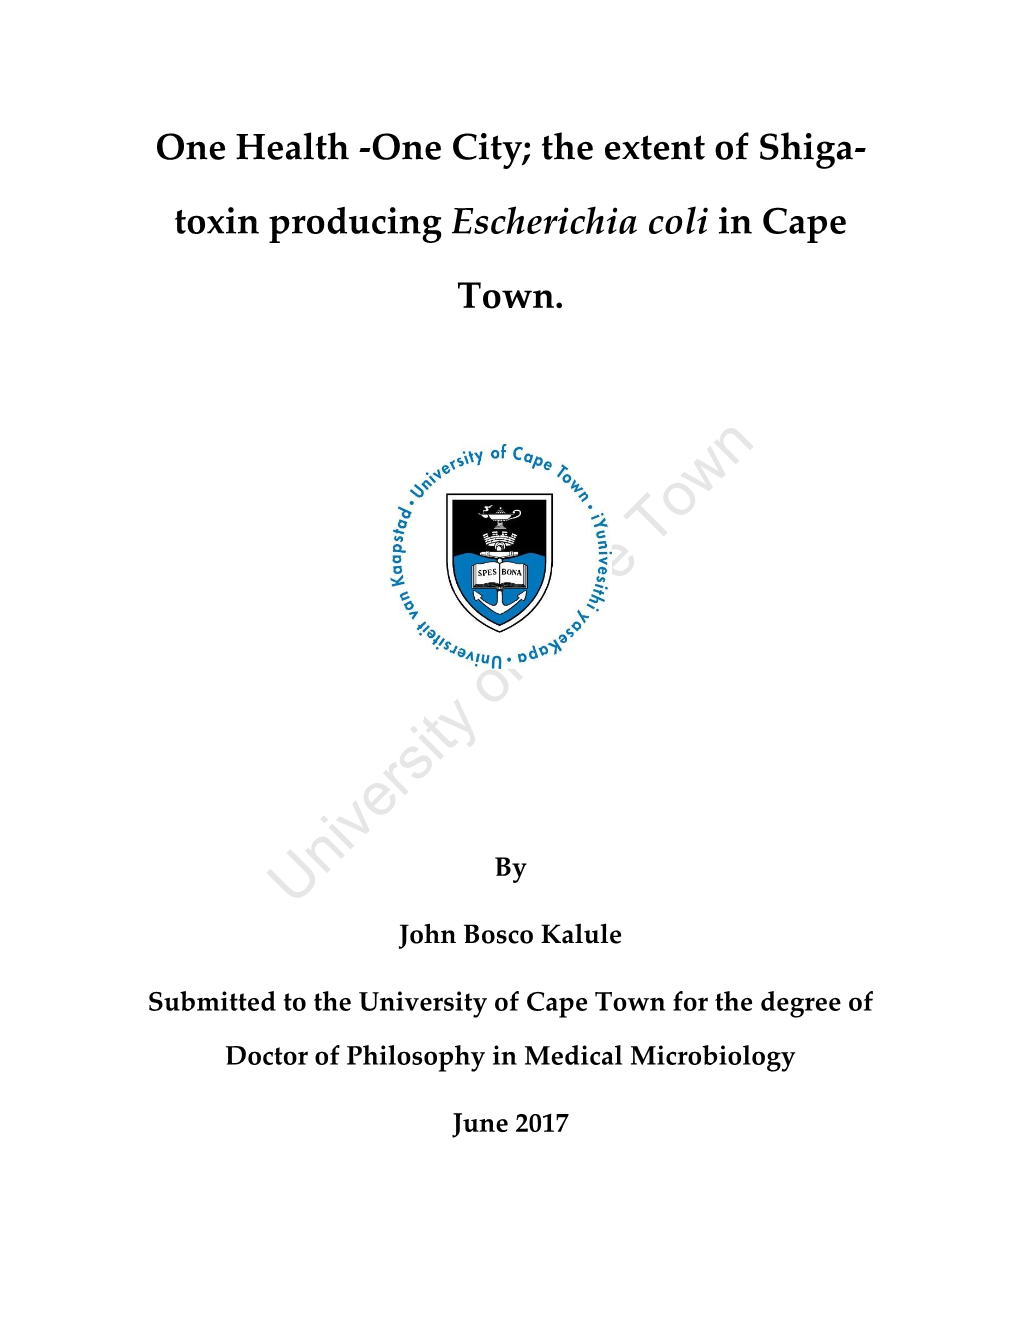 One City; the Extent of Shiga- Toxin Producing Escherichia Coli in Cape Town